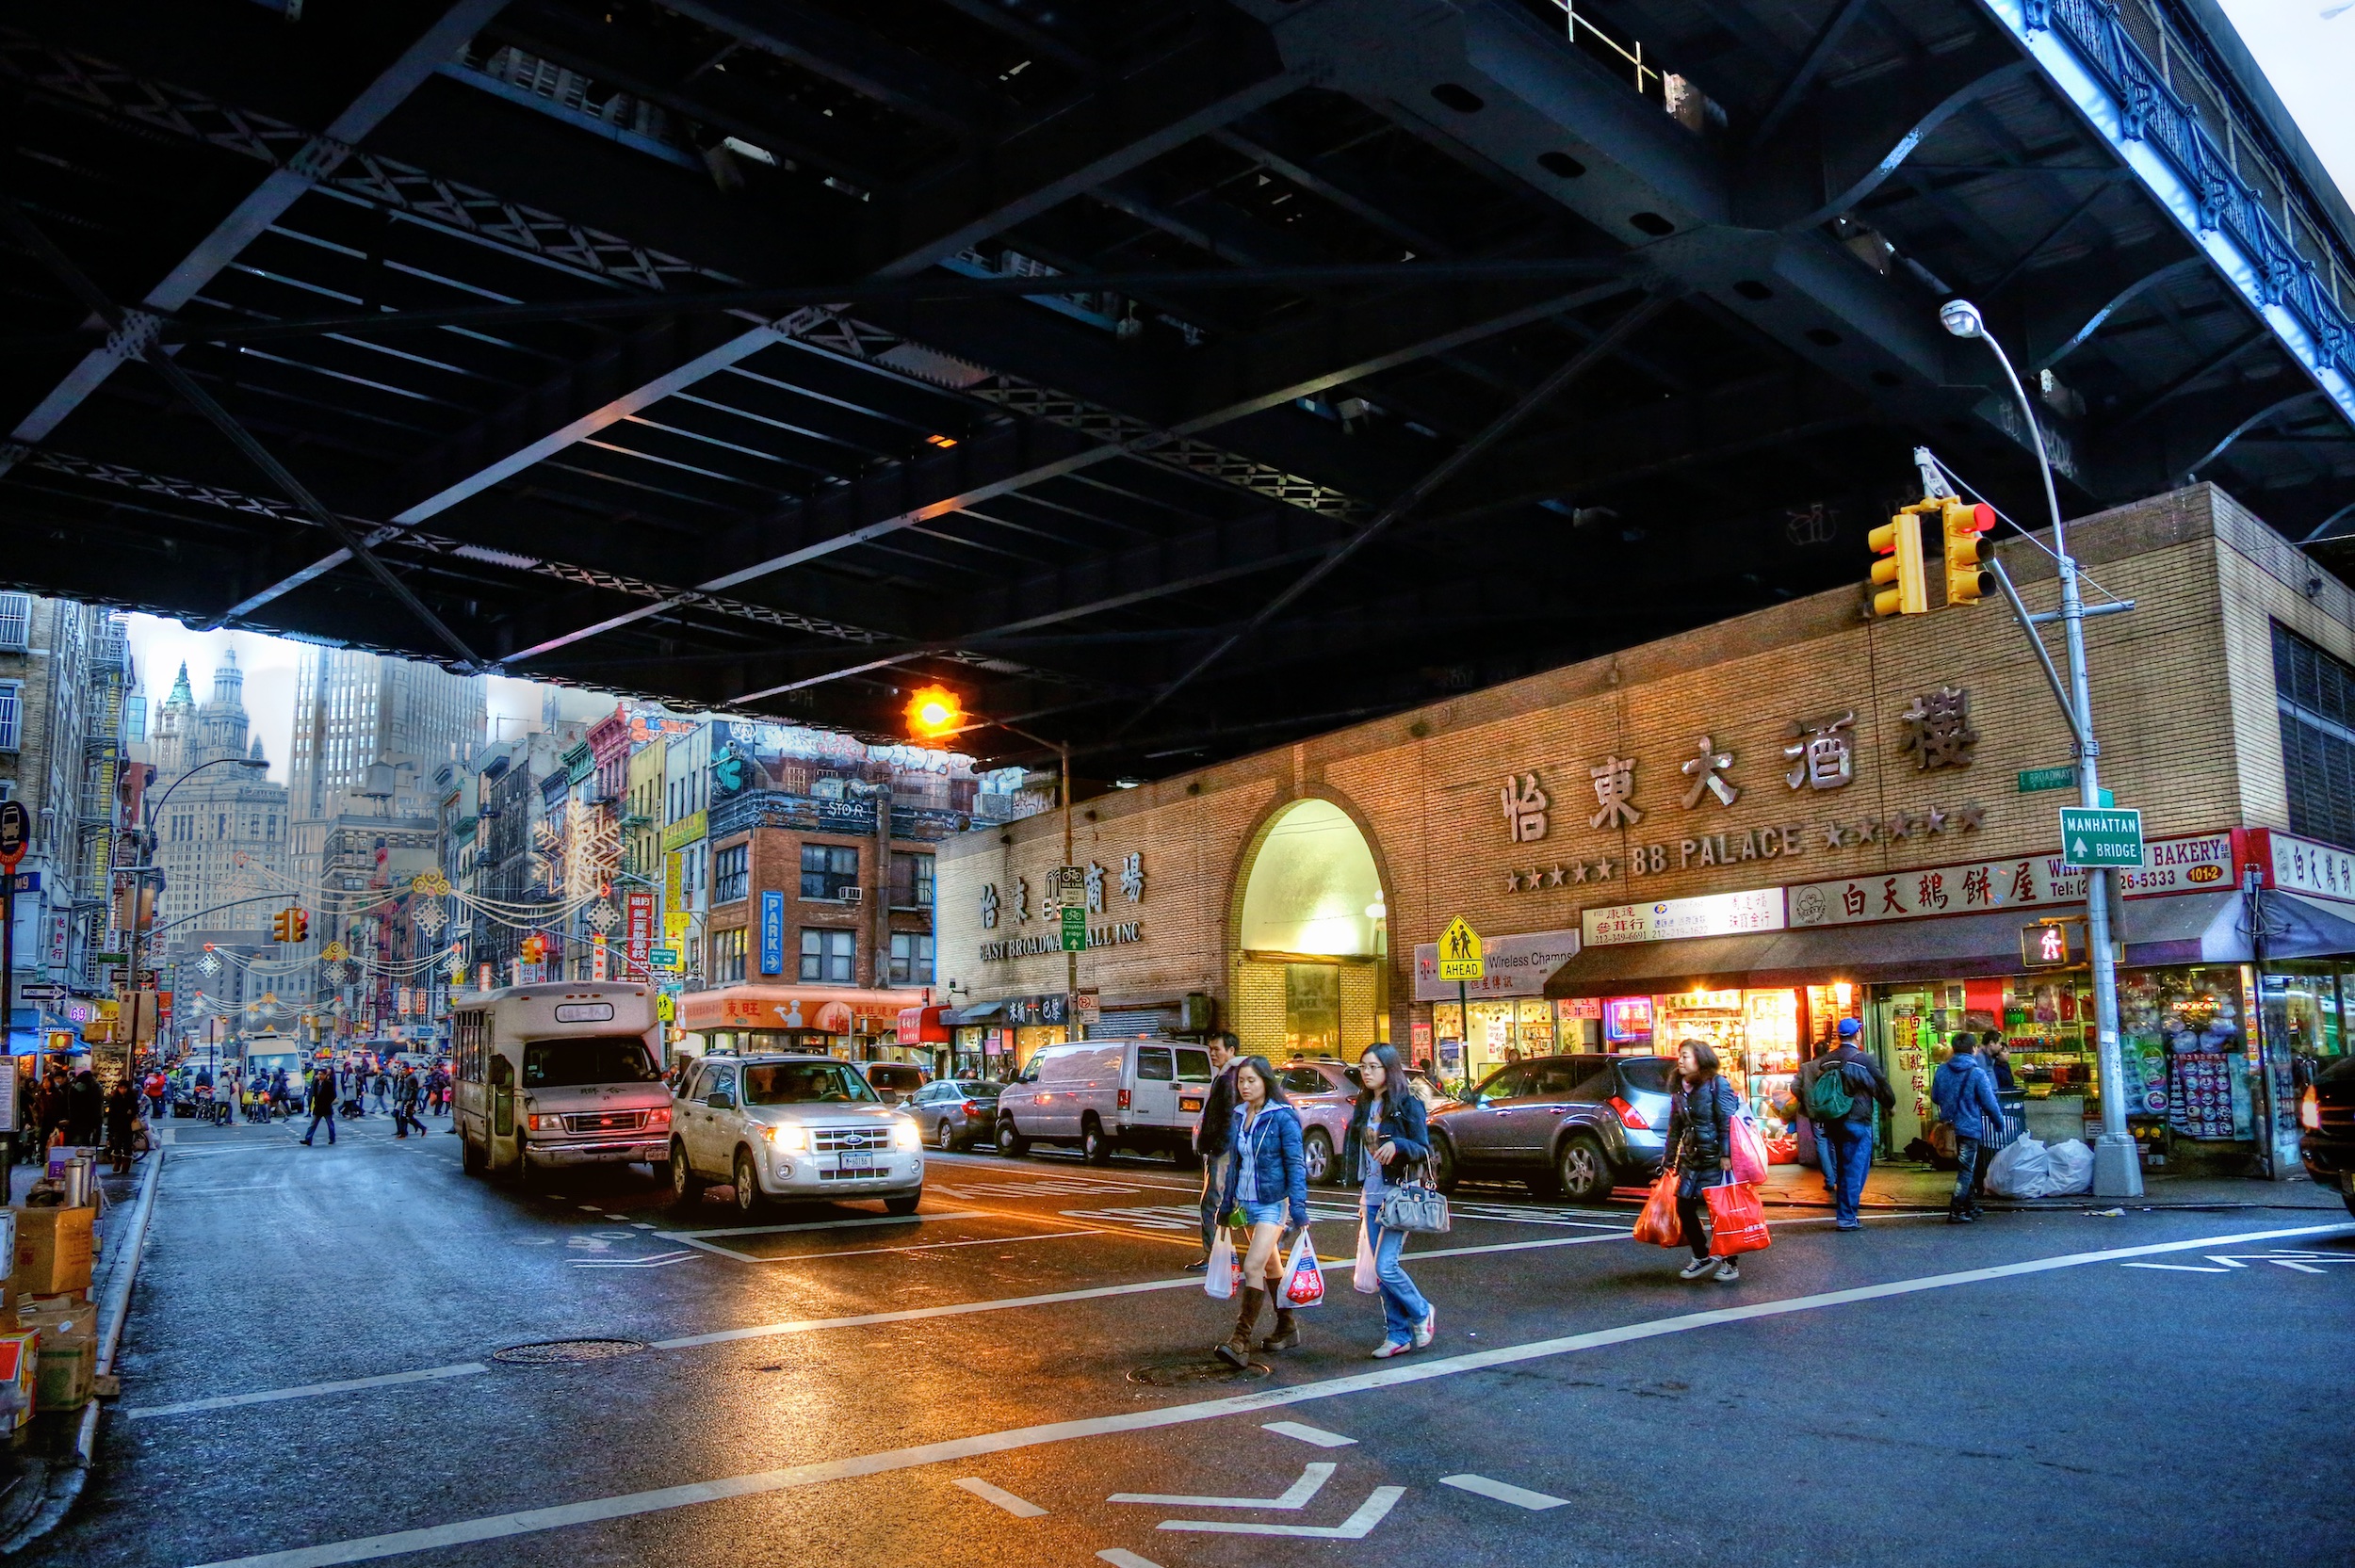 Chinatown in New York City